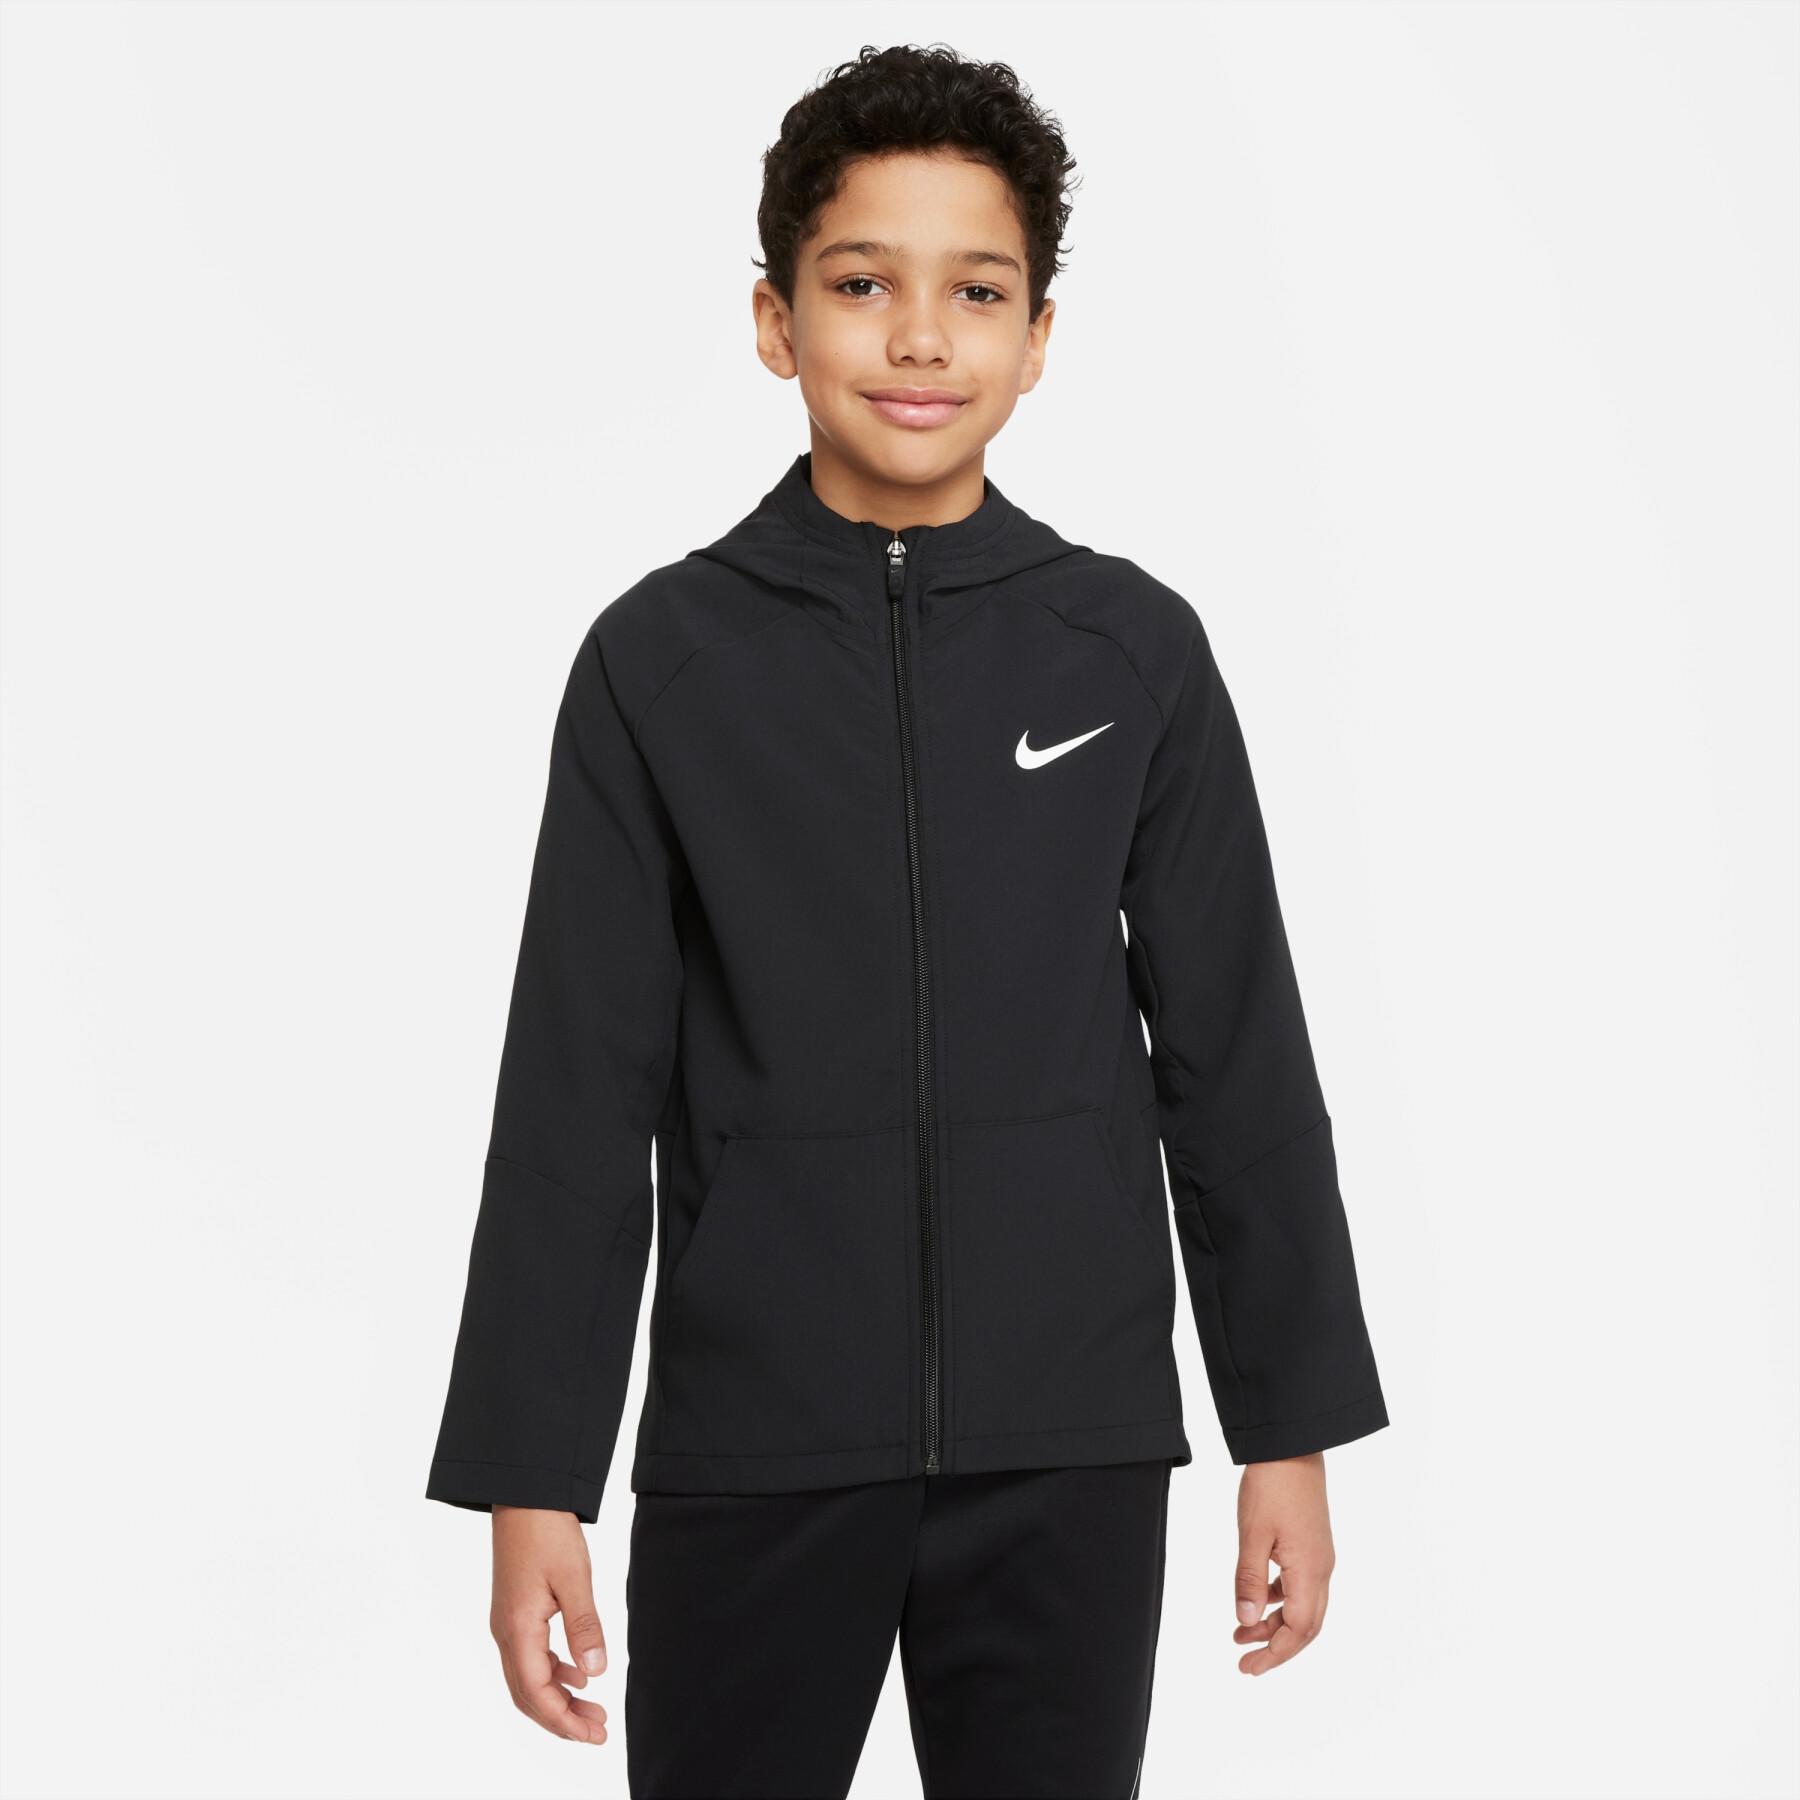 Waterproof jacket for children Nike